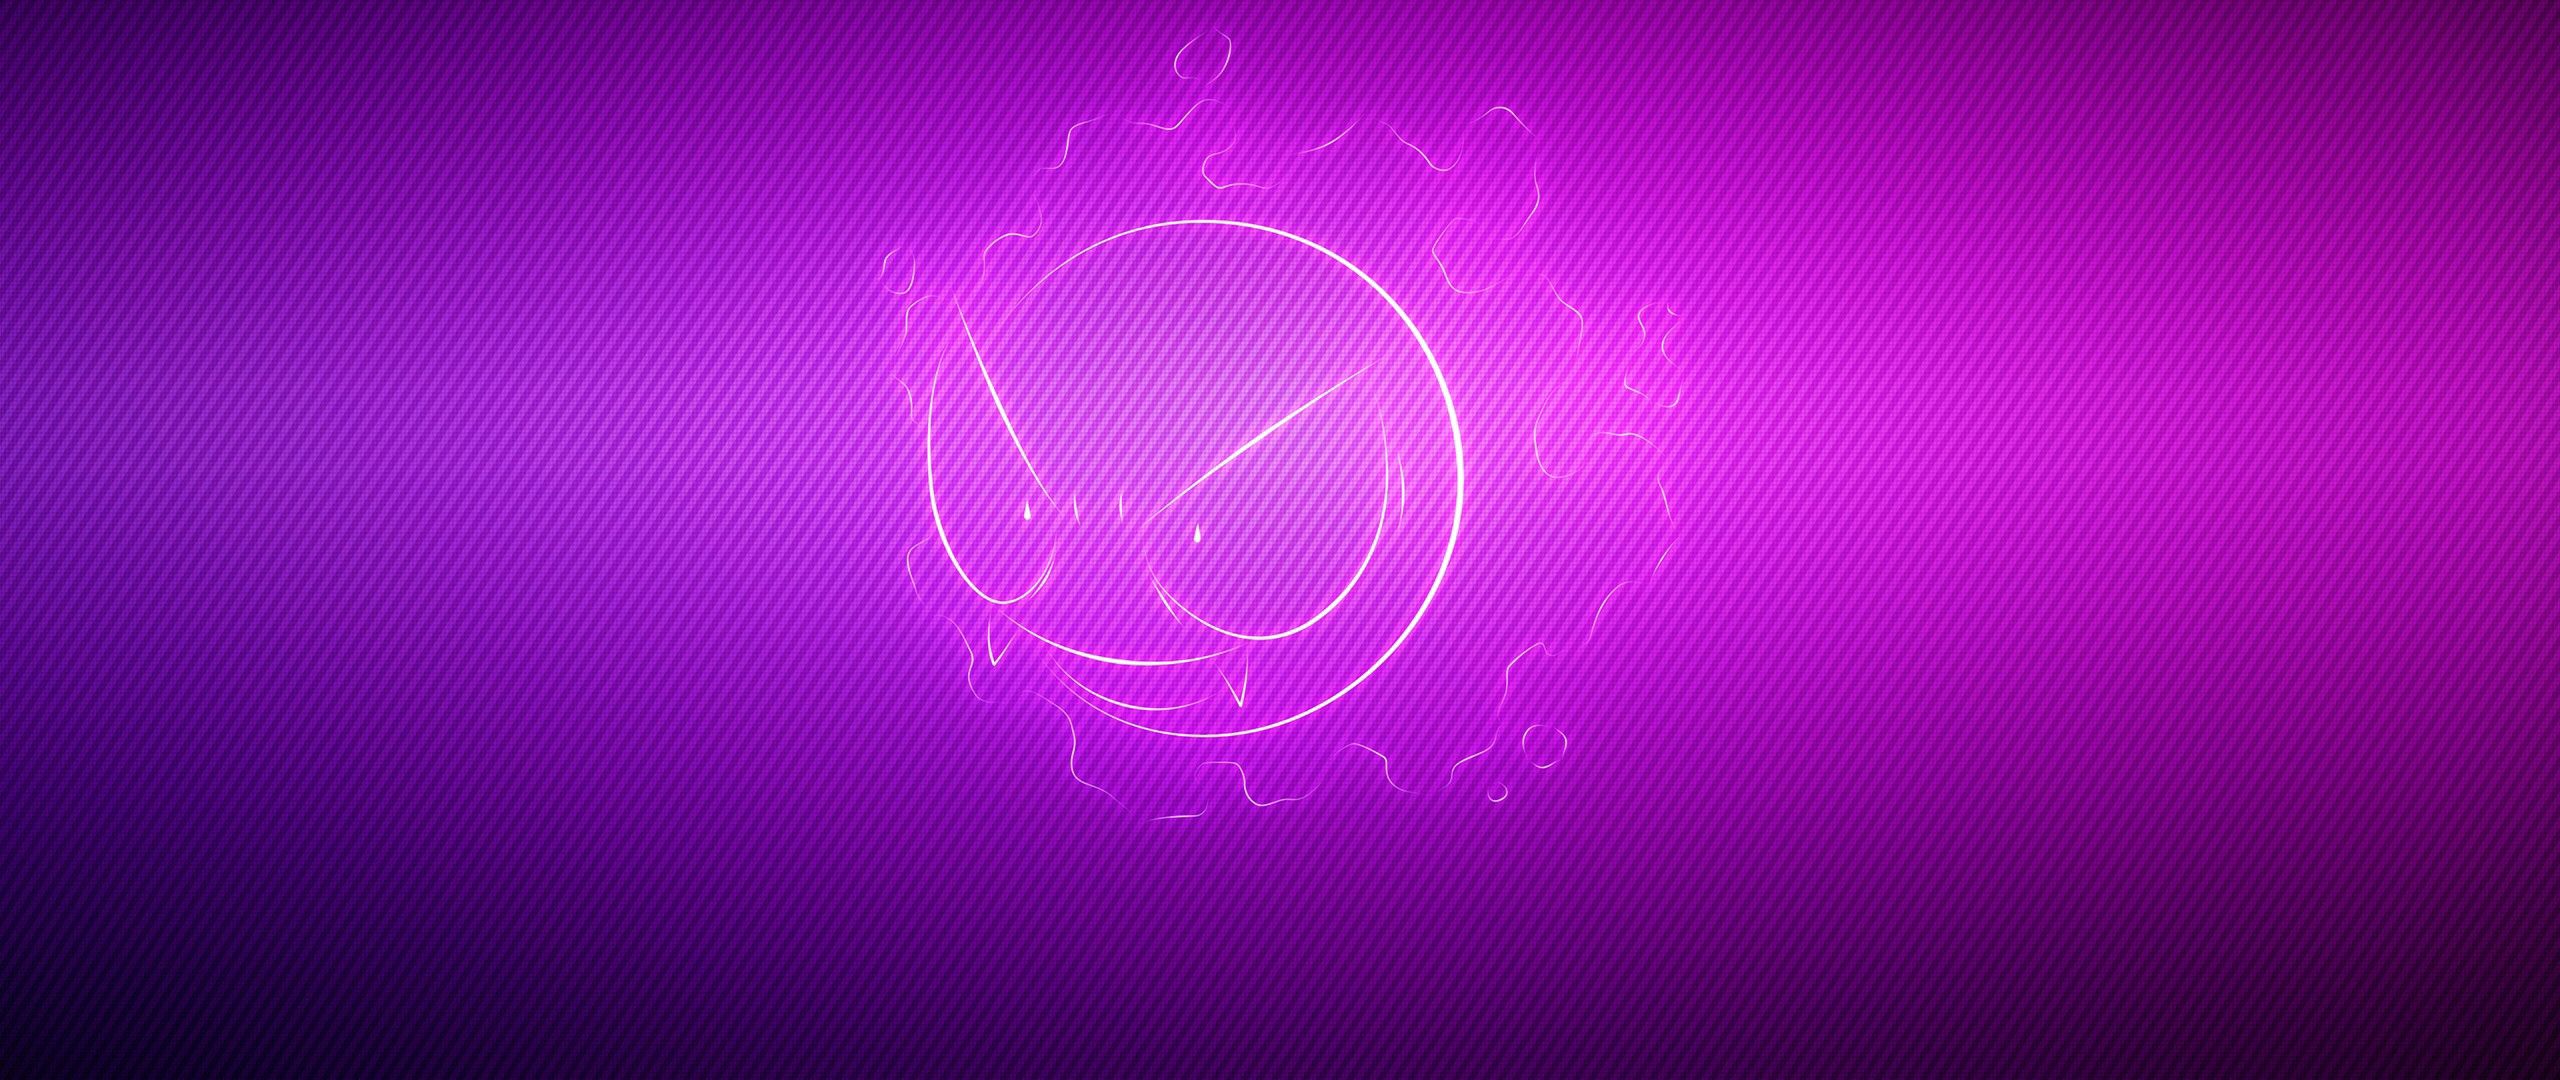 Download wallpaper 2560x1080 gastly, pokemon, purple, light dual wide 1080p HD background